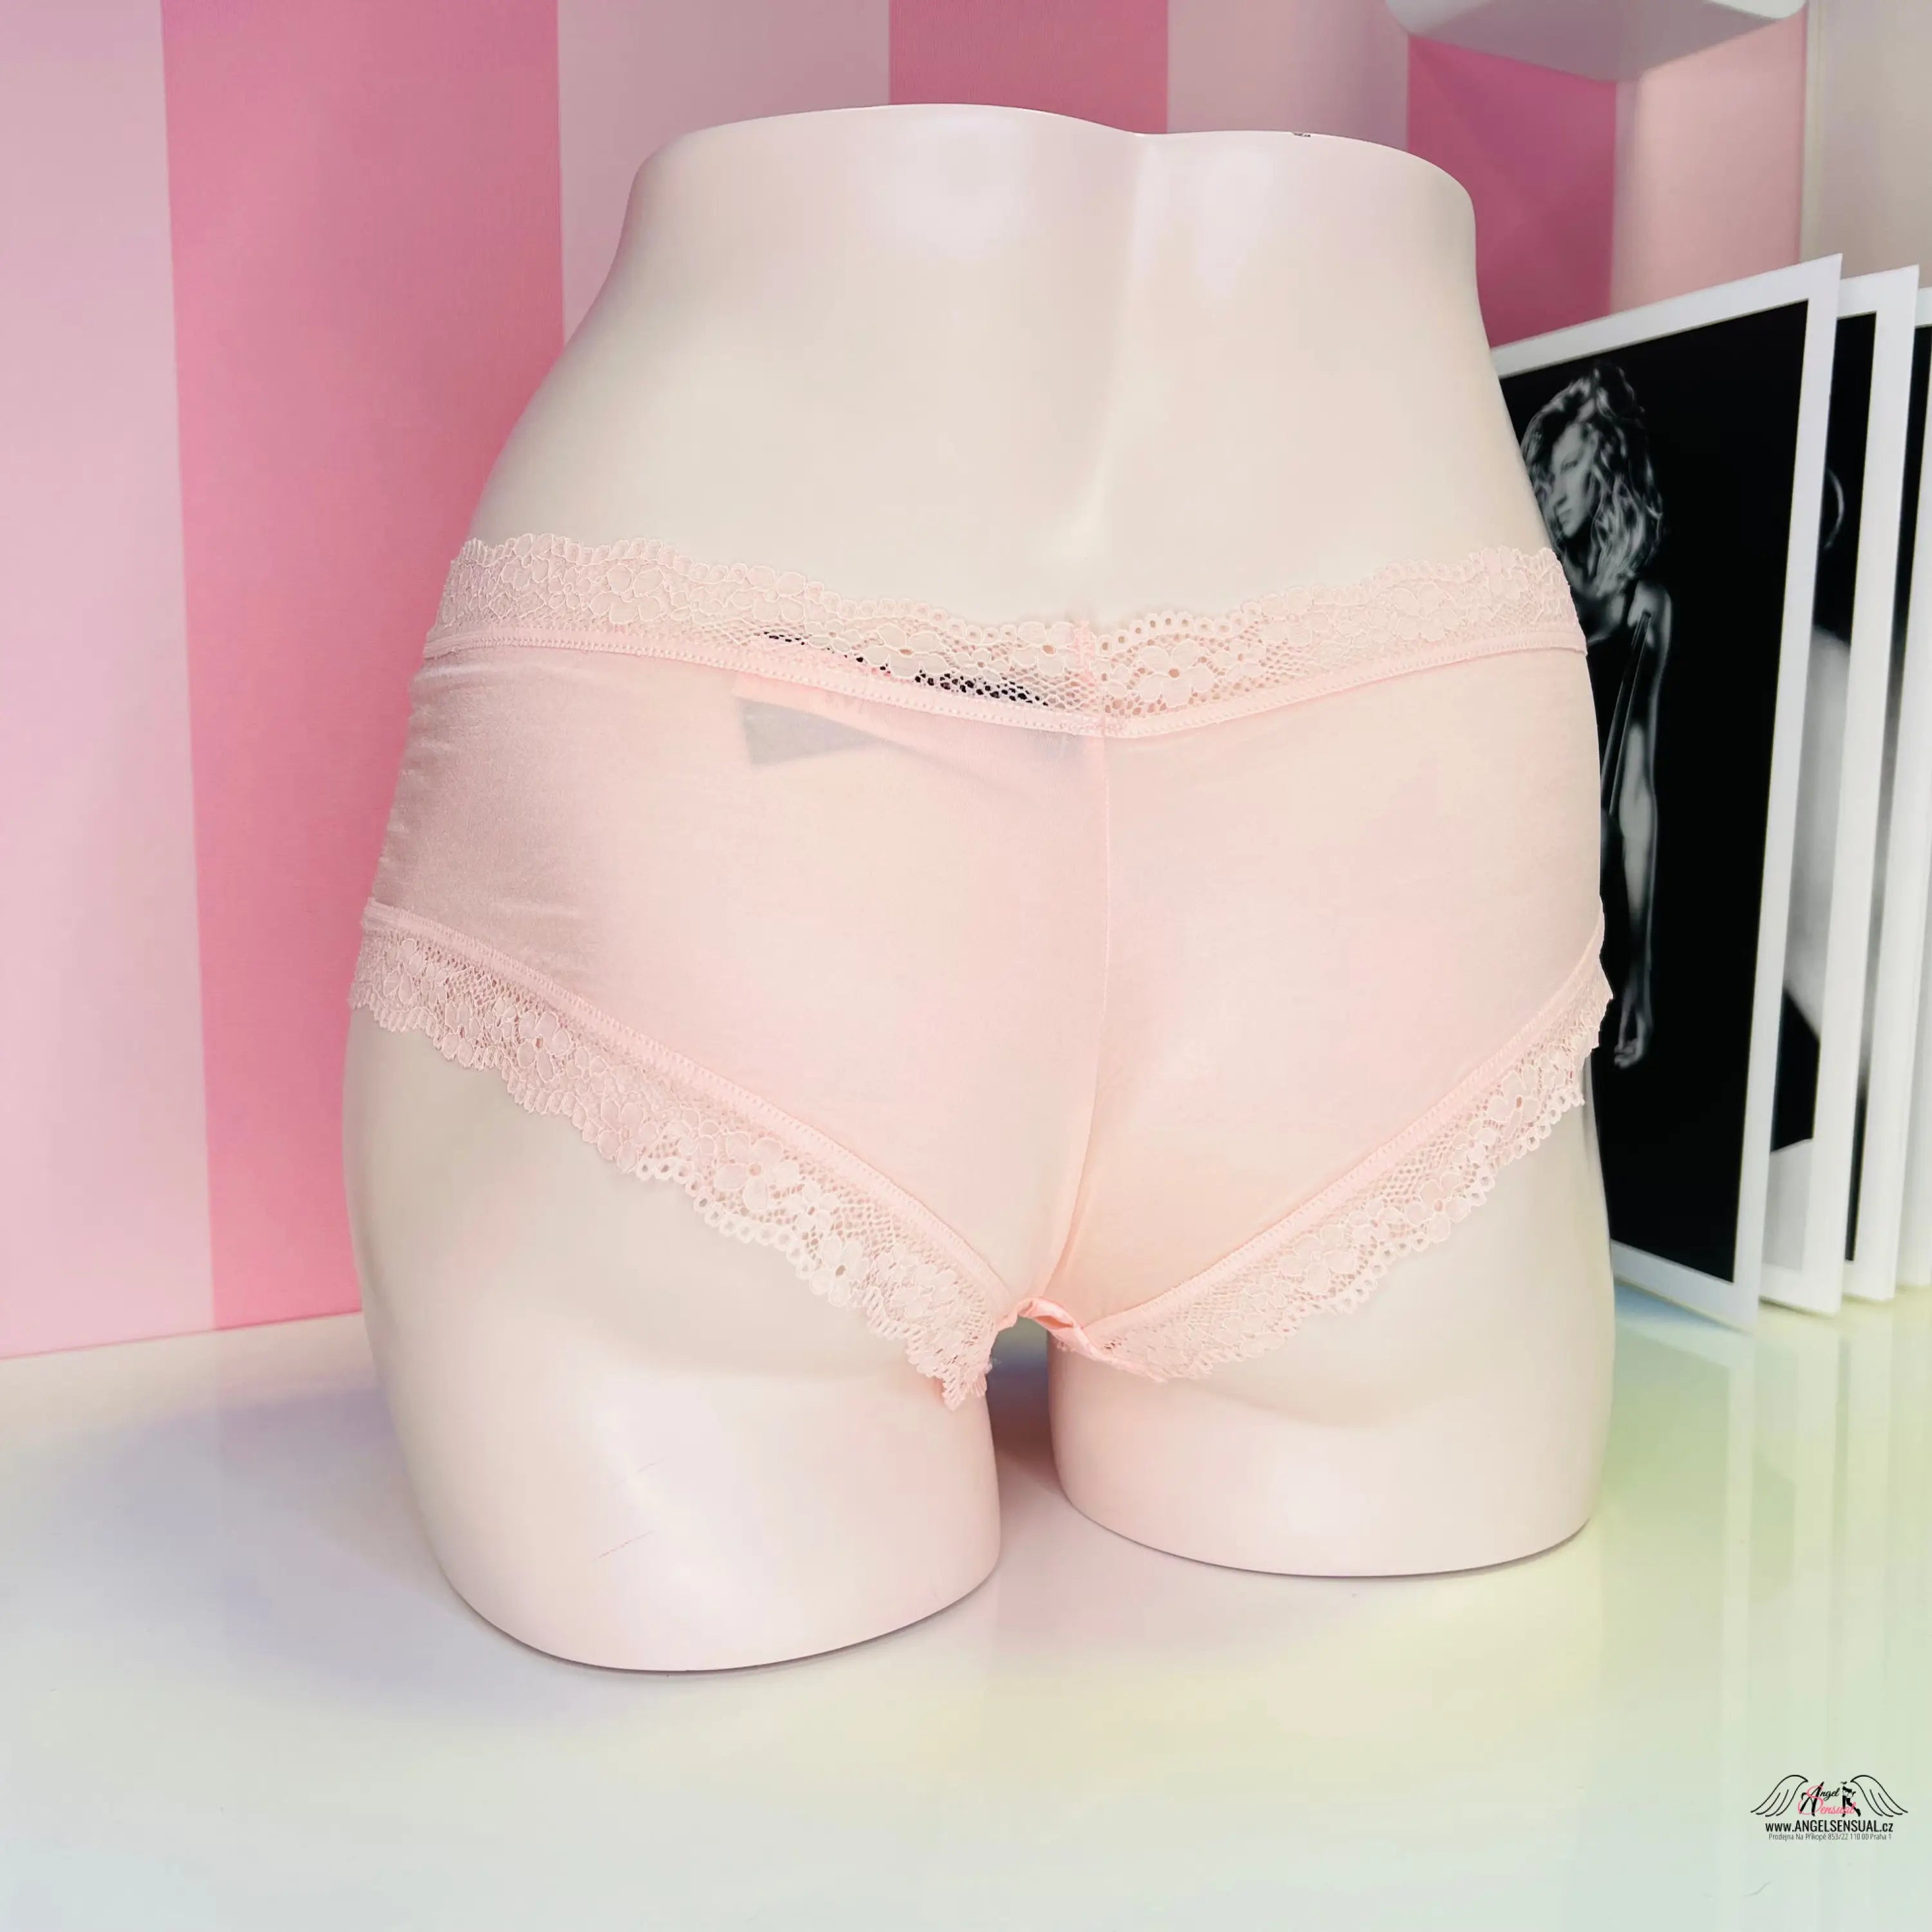 Lesklé kalhotky s krajkou - Kalhotky Victoria’s Secret